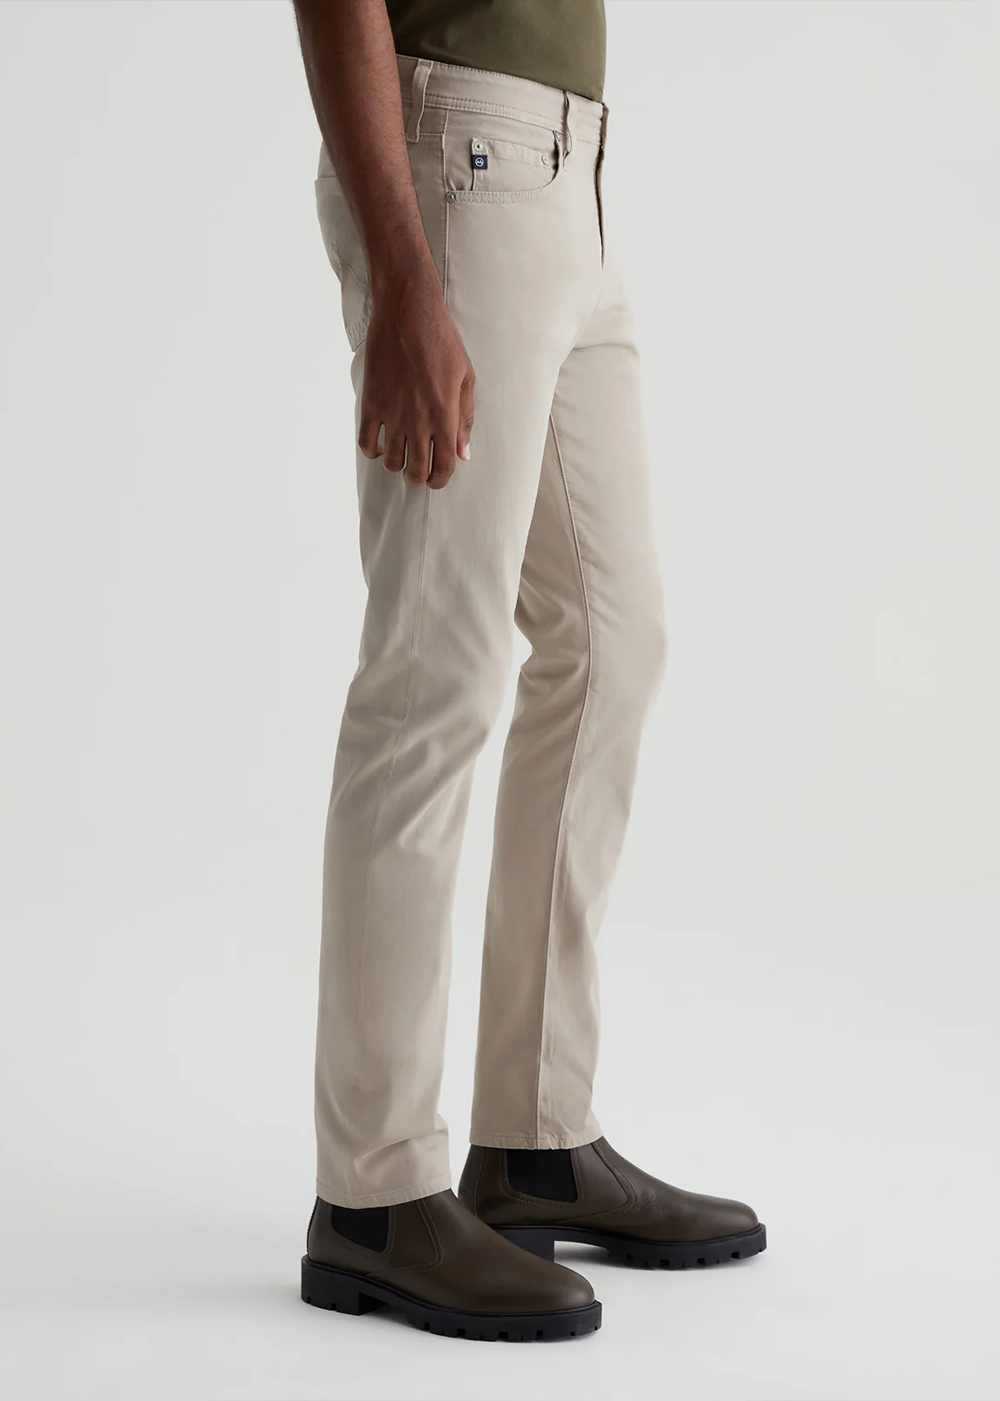 Dylan Slim Skinny Sateen Pant - Desert Stone - AG Jeans Canada - Danali - 1139SUDEEE